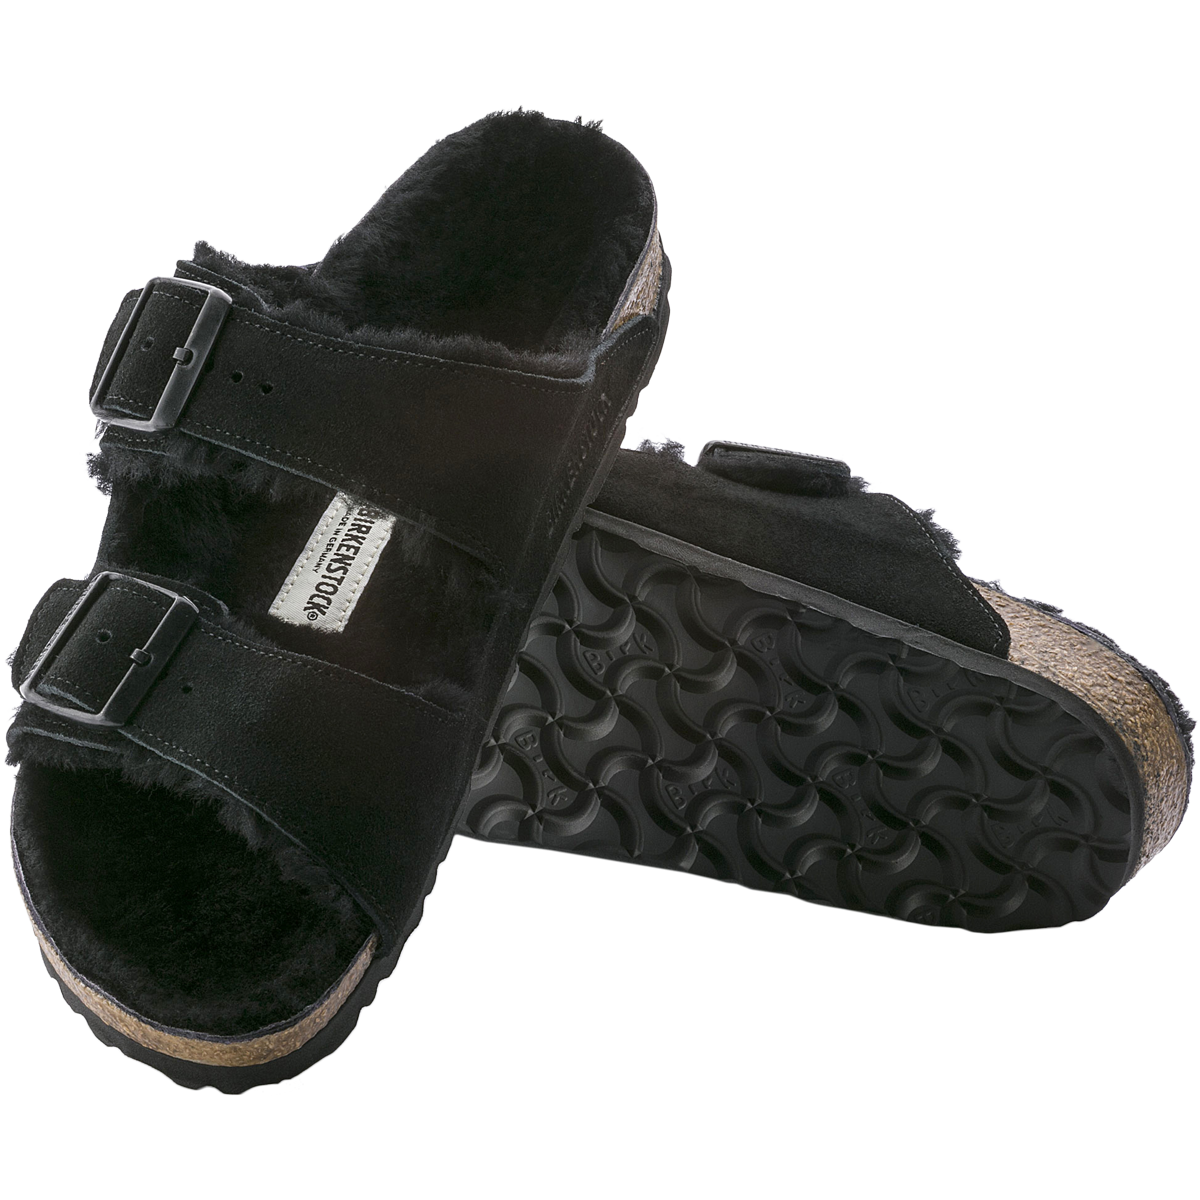 Birkenstock Shearling Arizona Green Suede Sandals Size 37 Narrow New